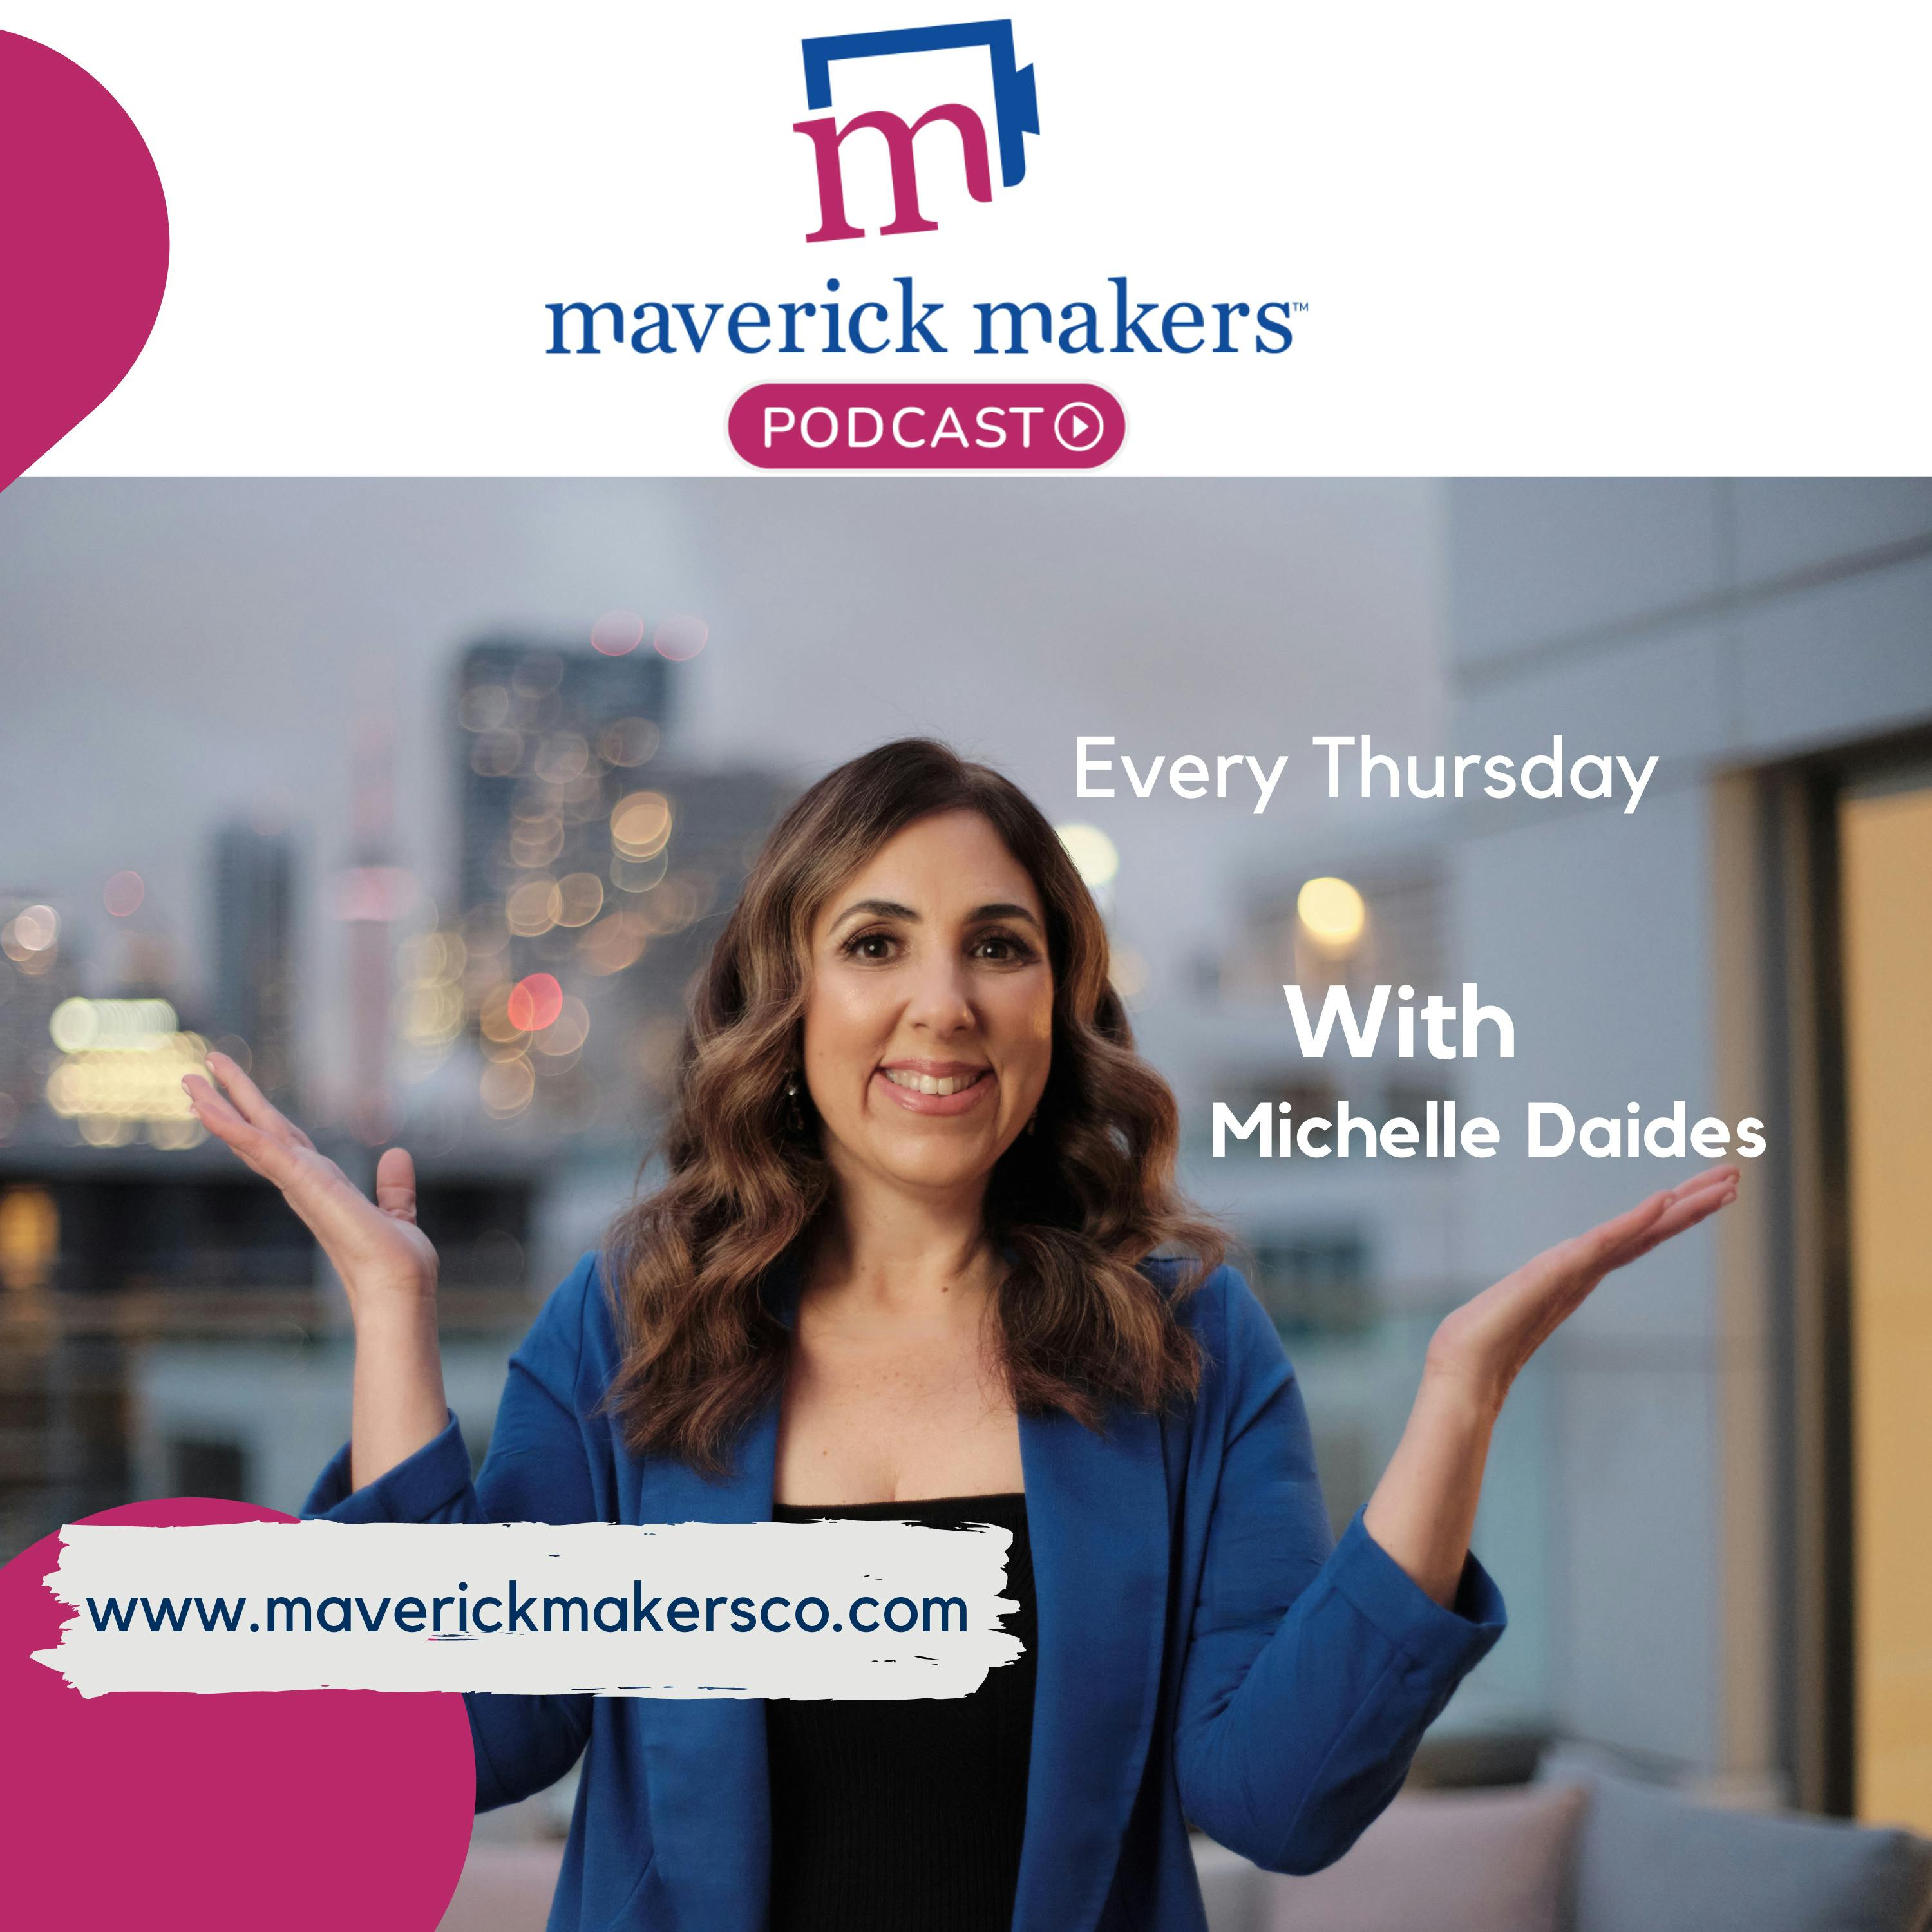 Maverick Makers Podcast Trailer